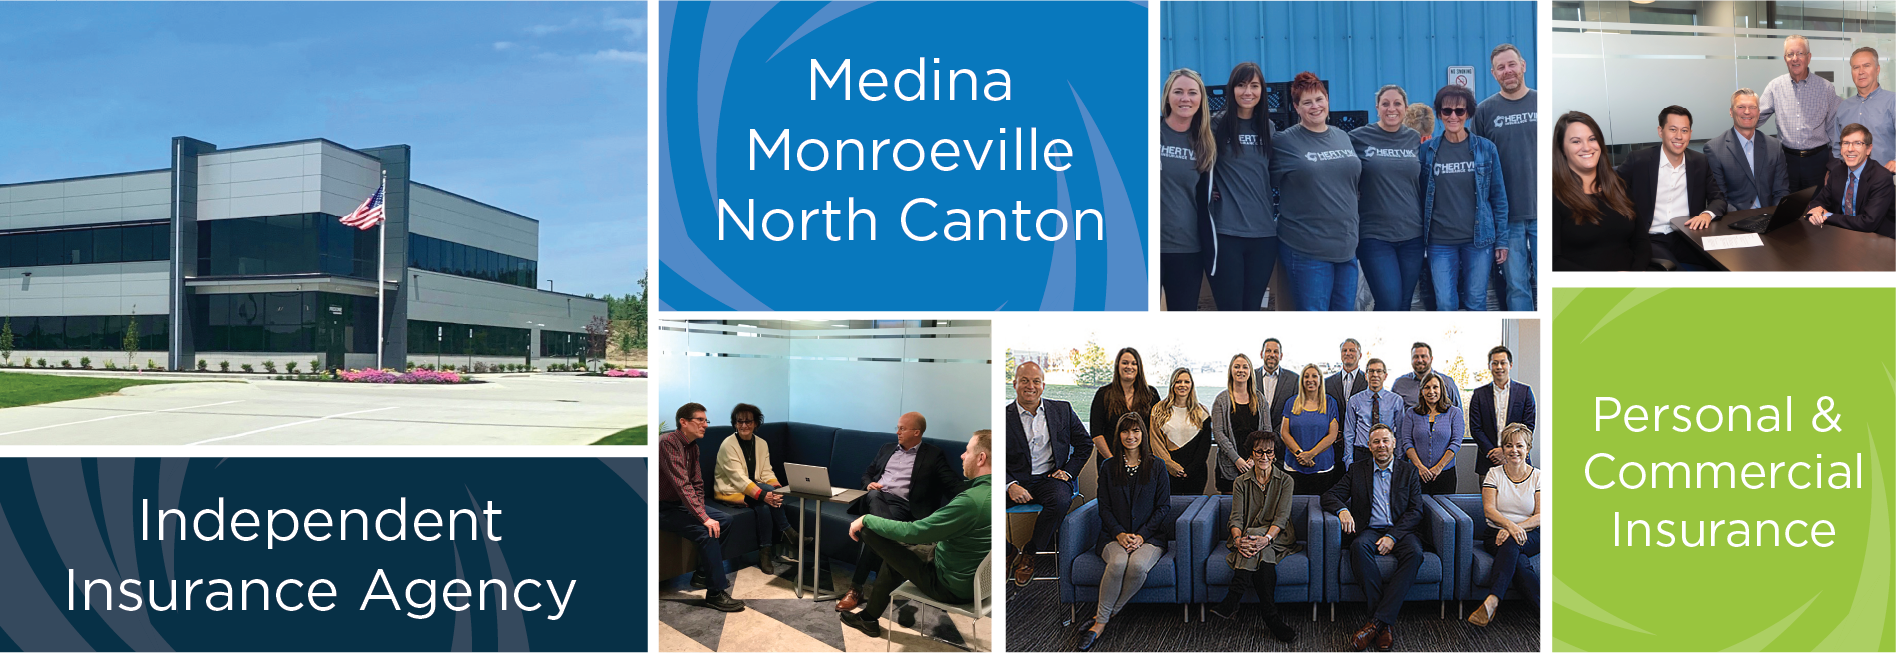 About Us Hertvik Insurance Medina Monroeville North Canton Header